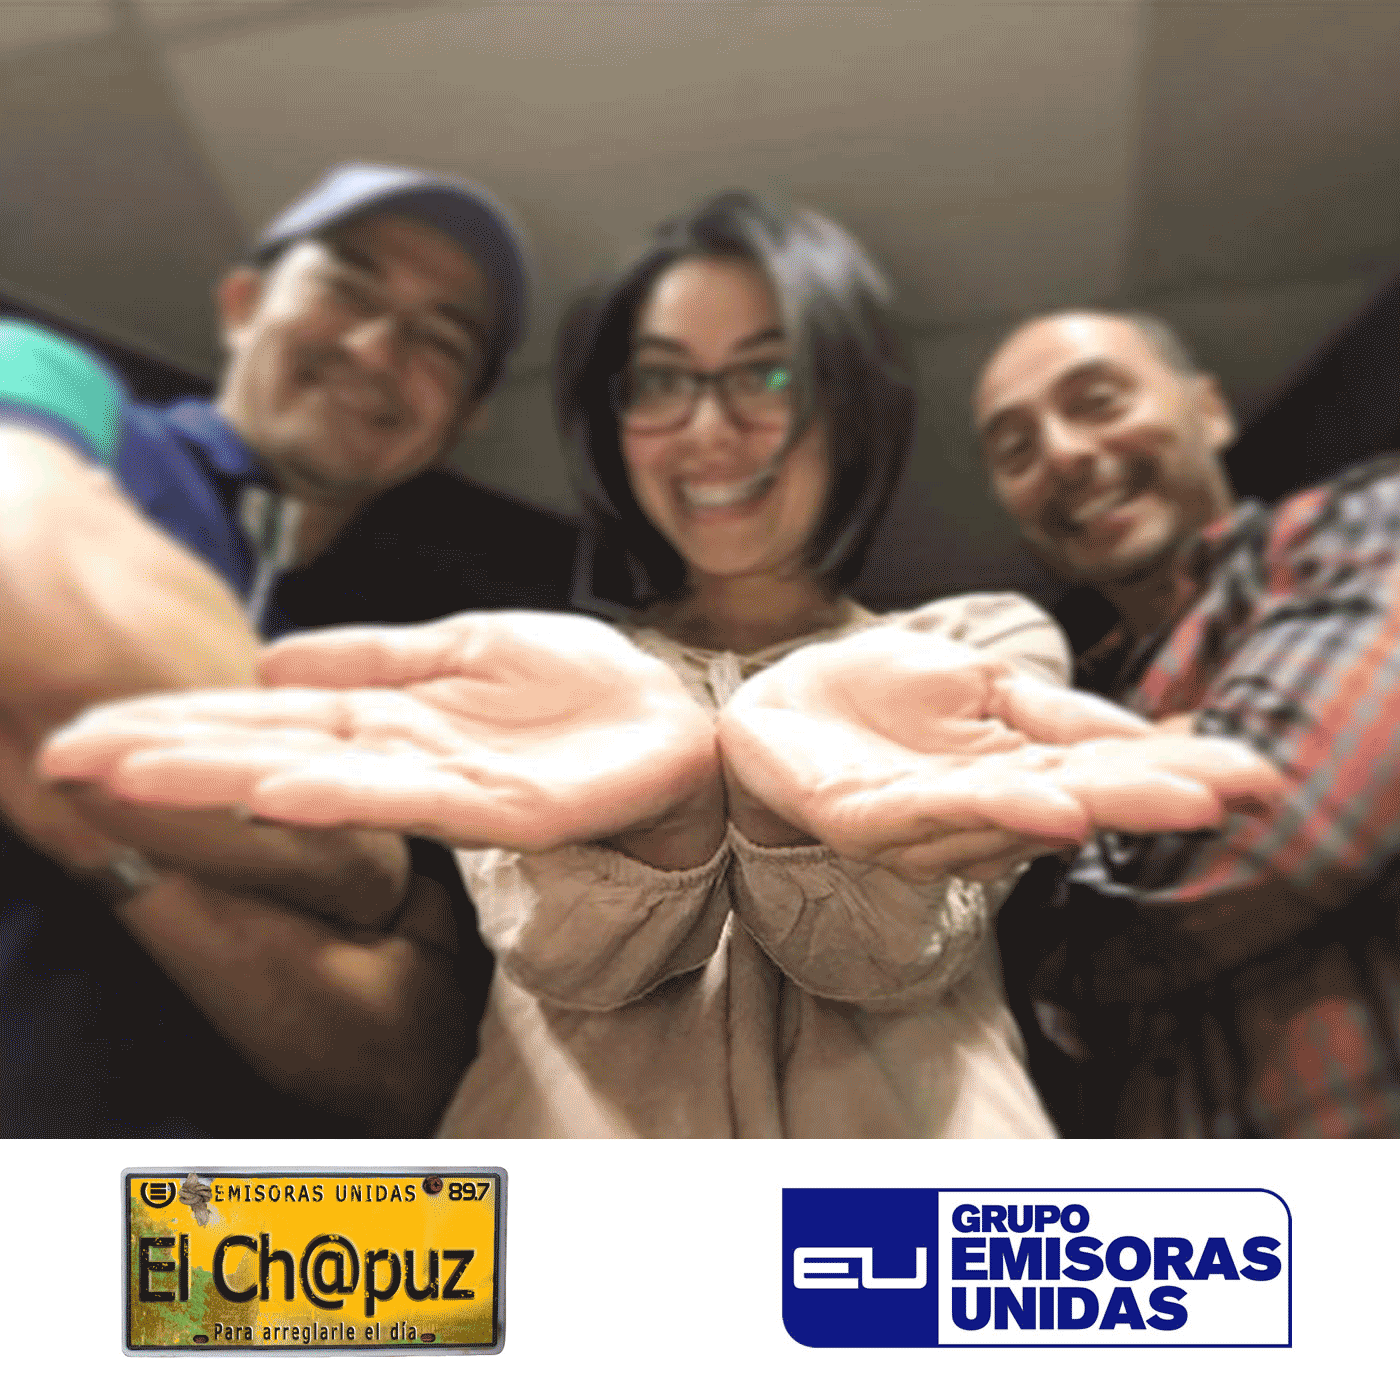 EC029 - El Chapuz - Emisoras unidas - #EnLaGavetaDeLosChunches